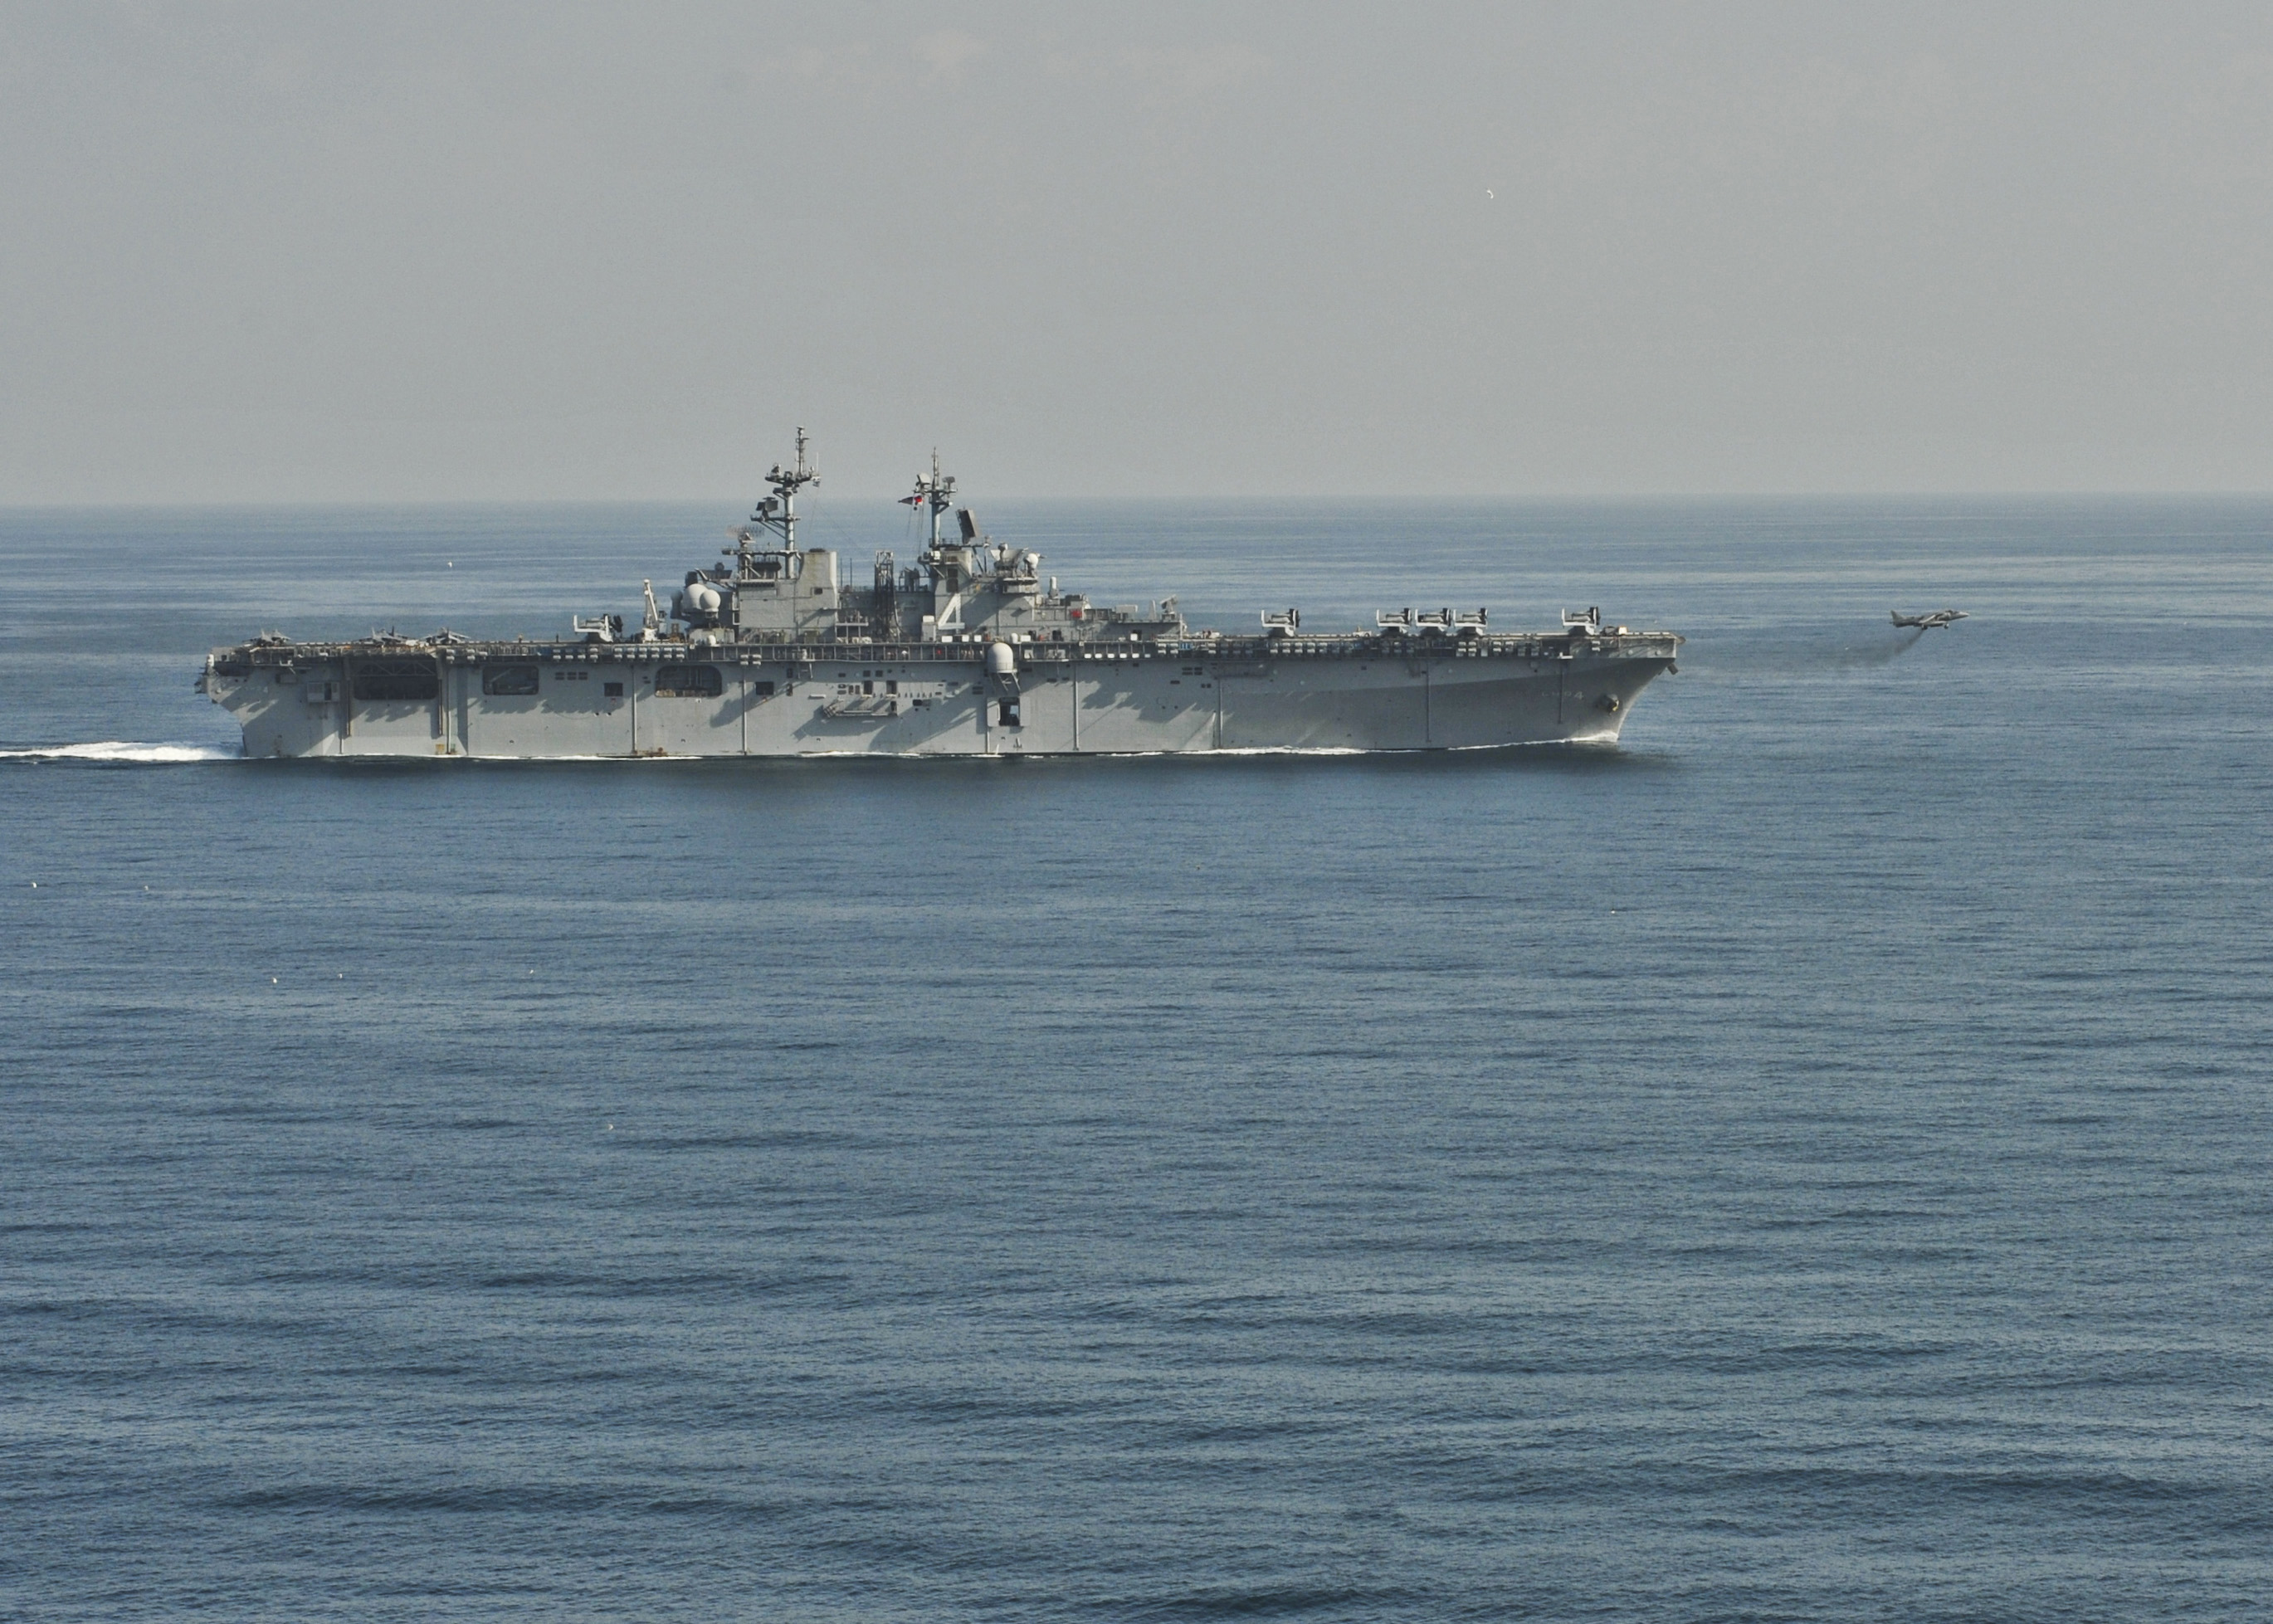 USS BOXER LHD-4 am 19.12.2013 im Arabischen Meer Bild: U.S. Navy